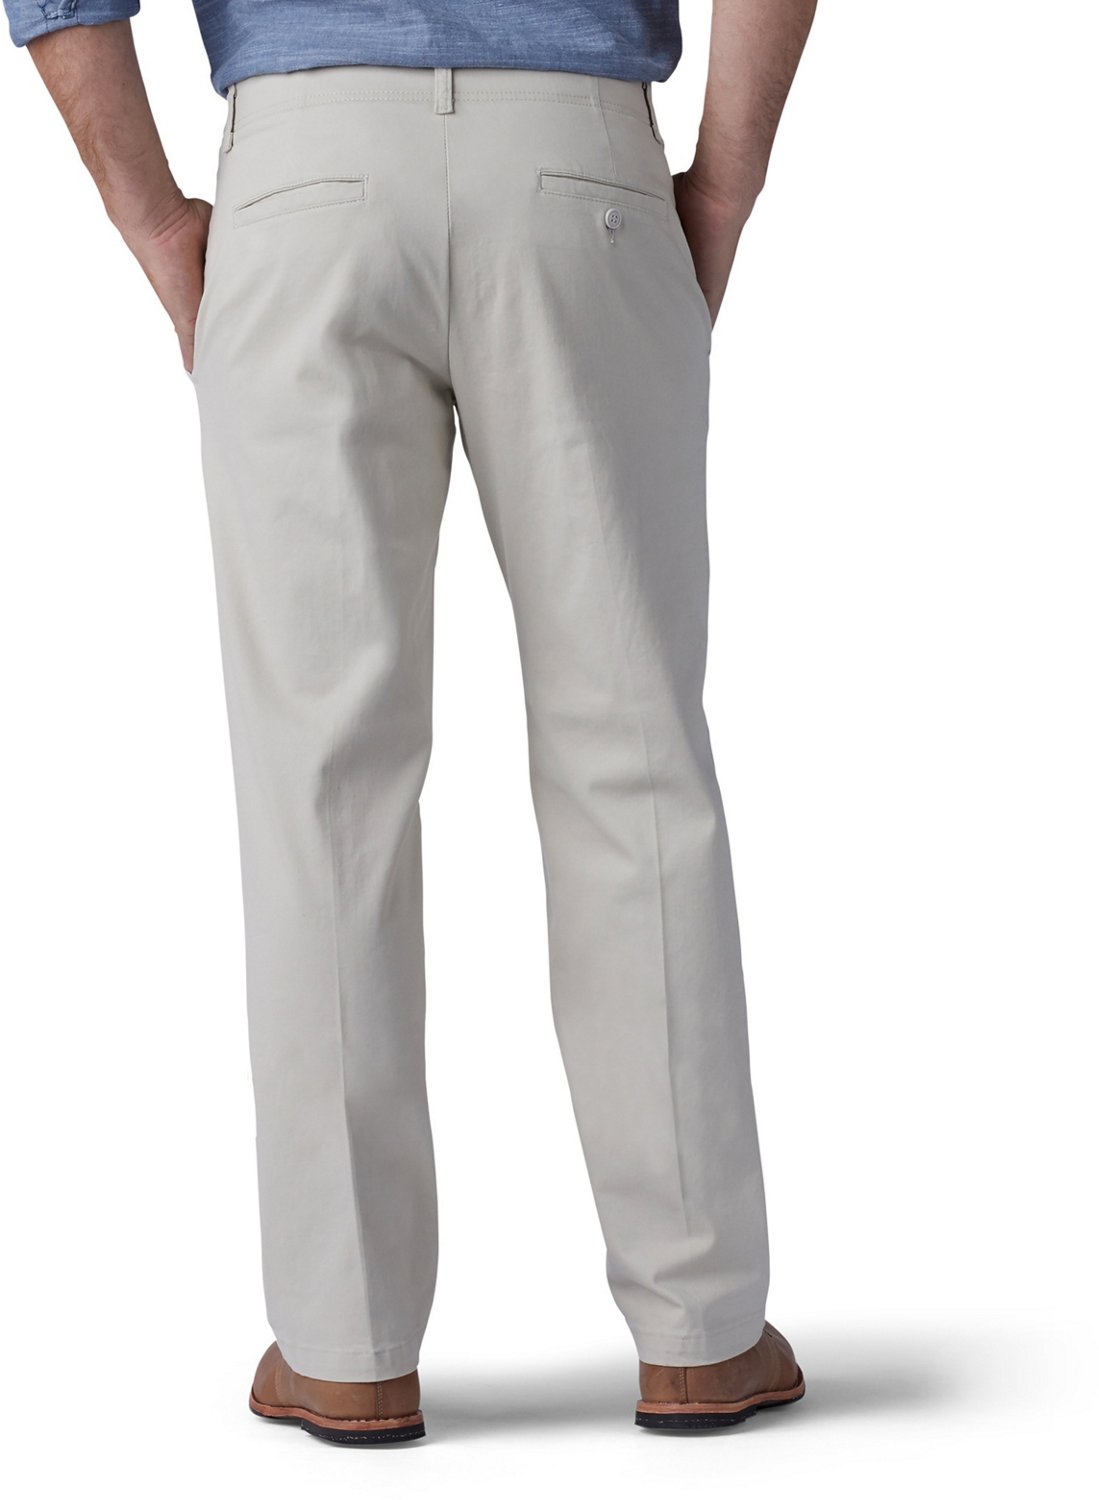 Lee Men's Extreme Comfort Khaki Pants | Free Shipping at Academy